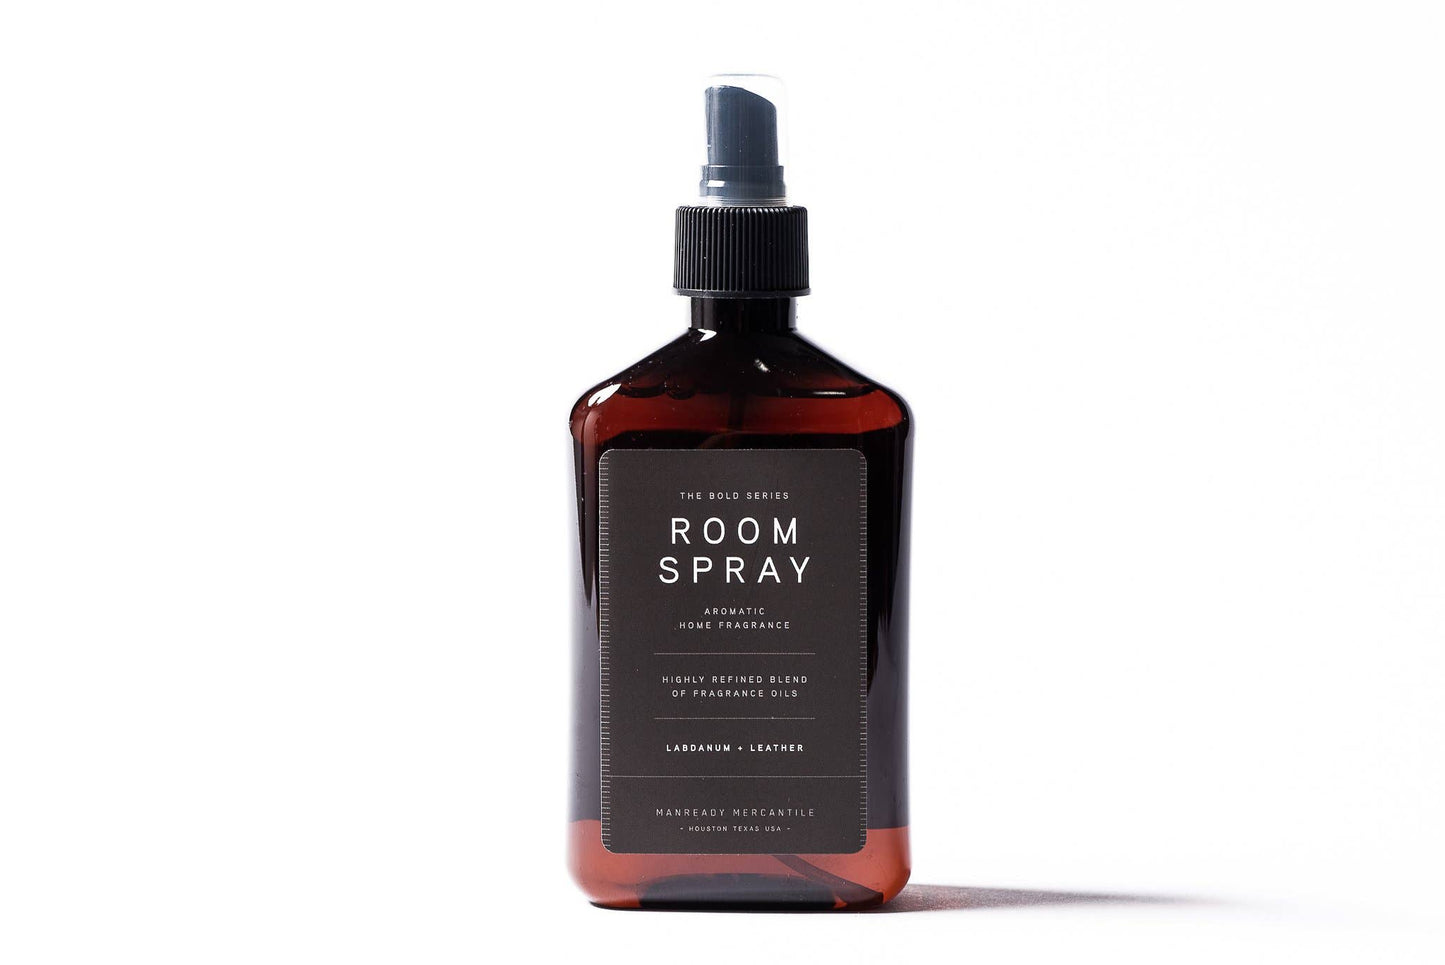 The Bold Series Room Spray | Labdanum + Leather